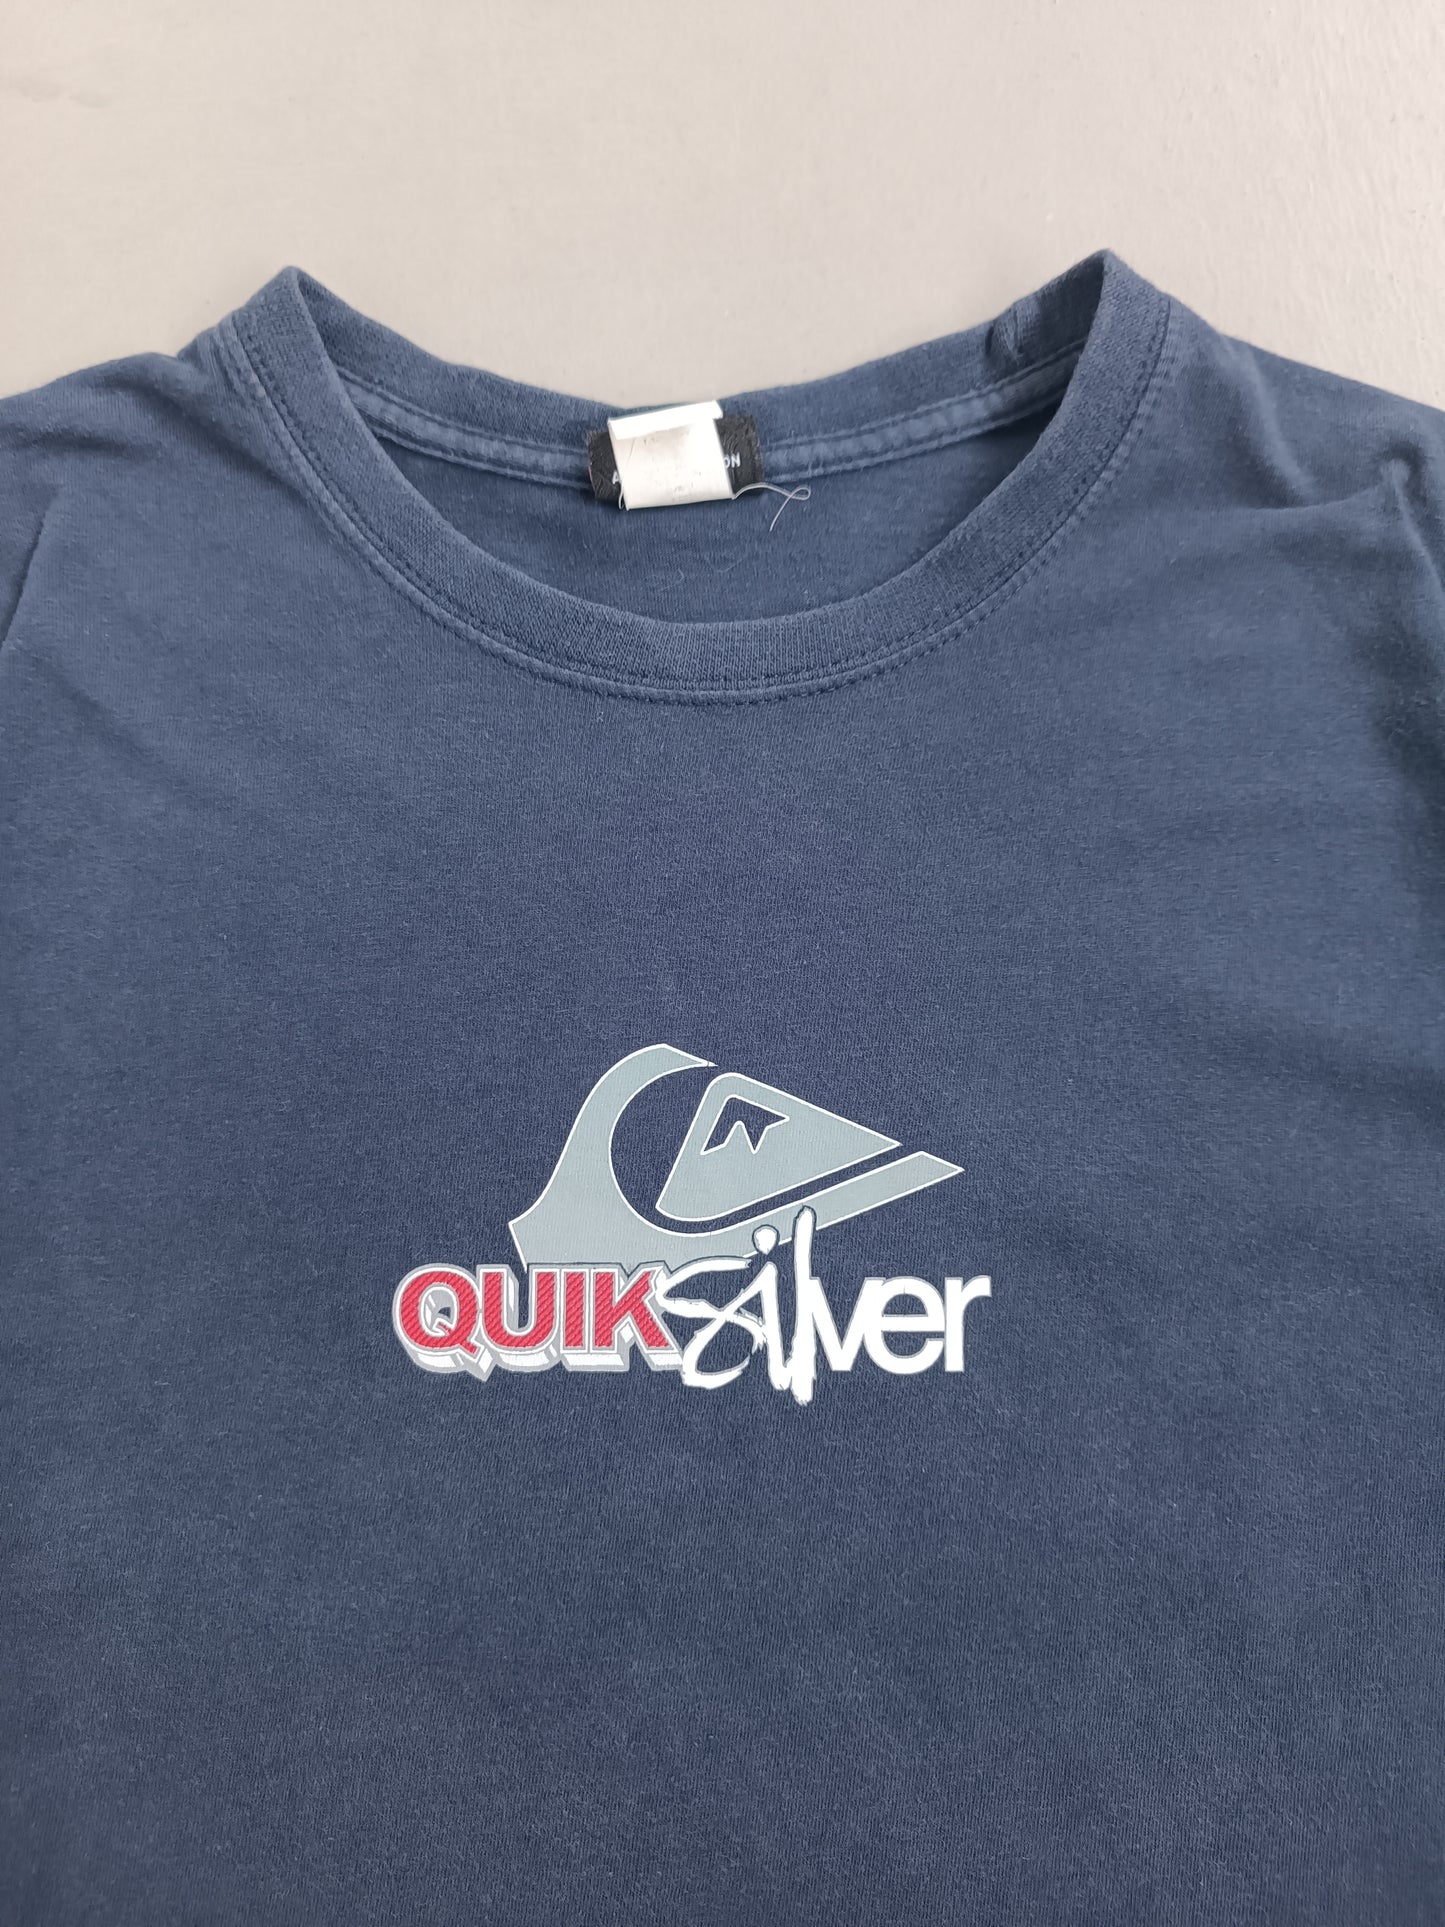 Quiksilver logo - M